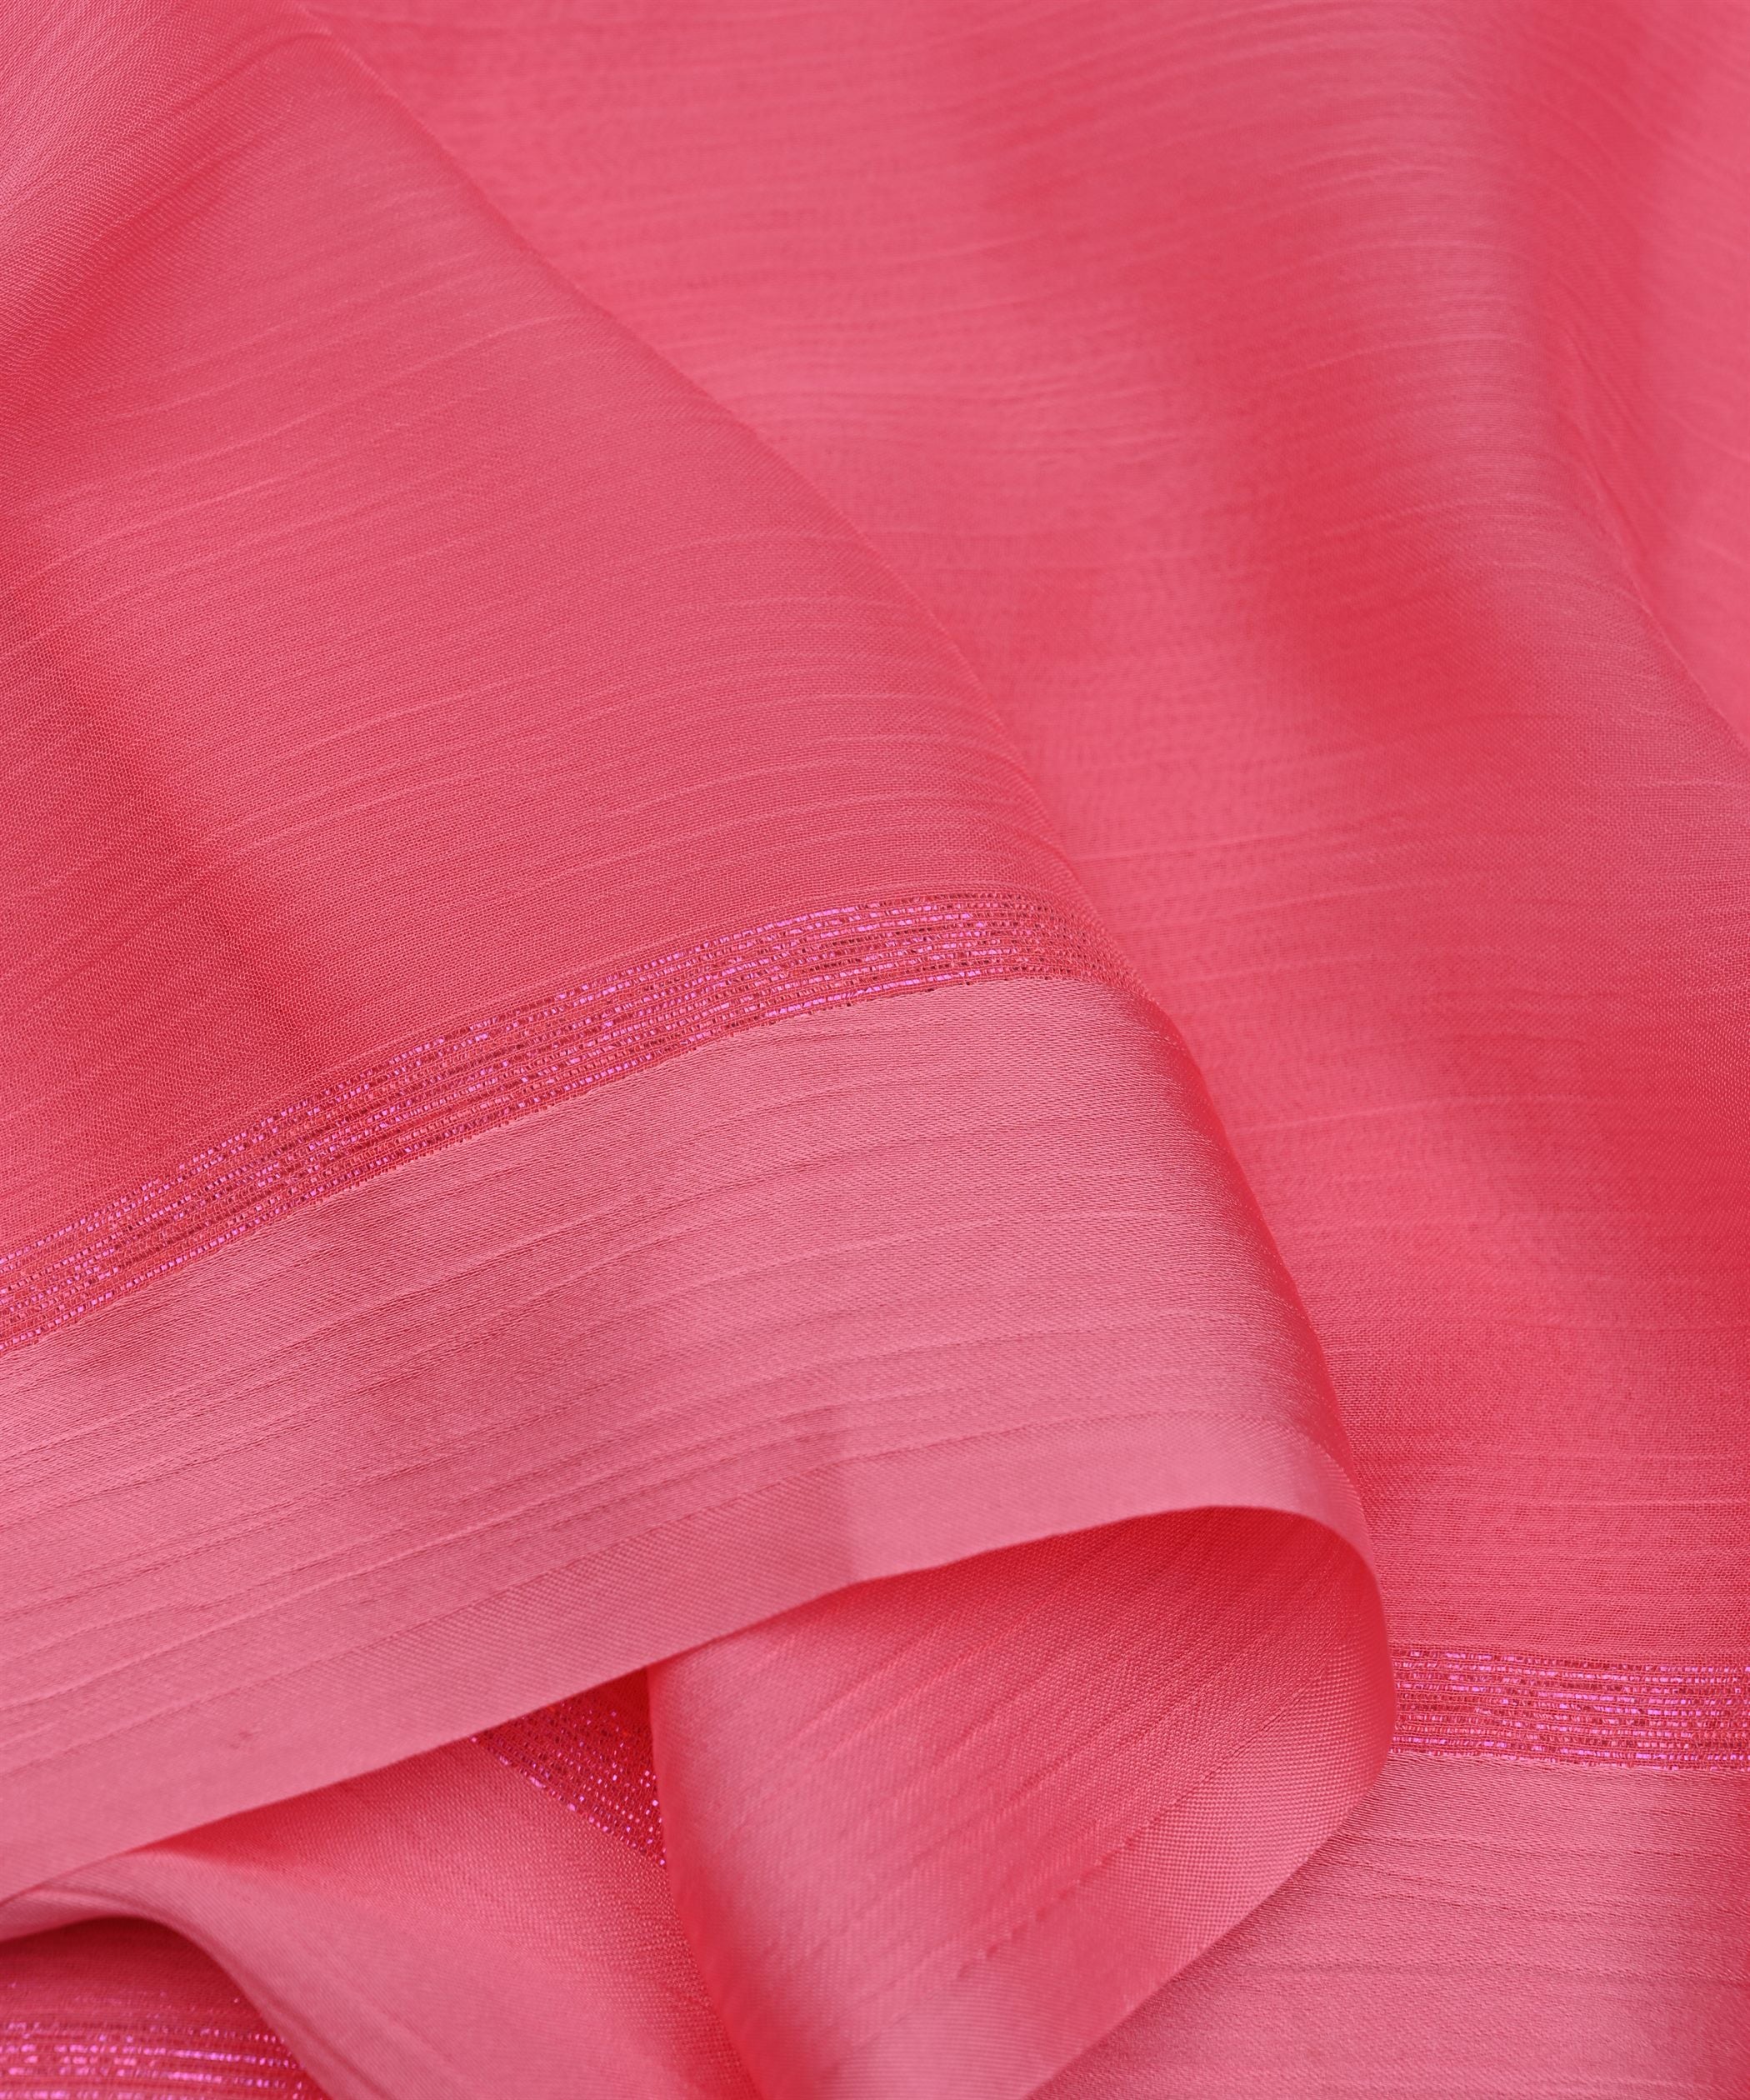 Plain Light Pink Chiffon Fabric at Rs 95/meter in New Delhi